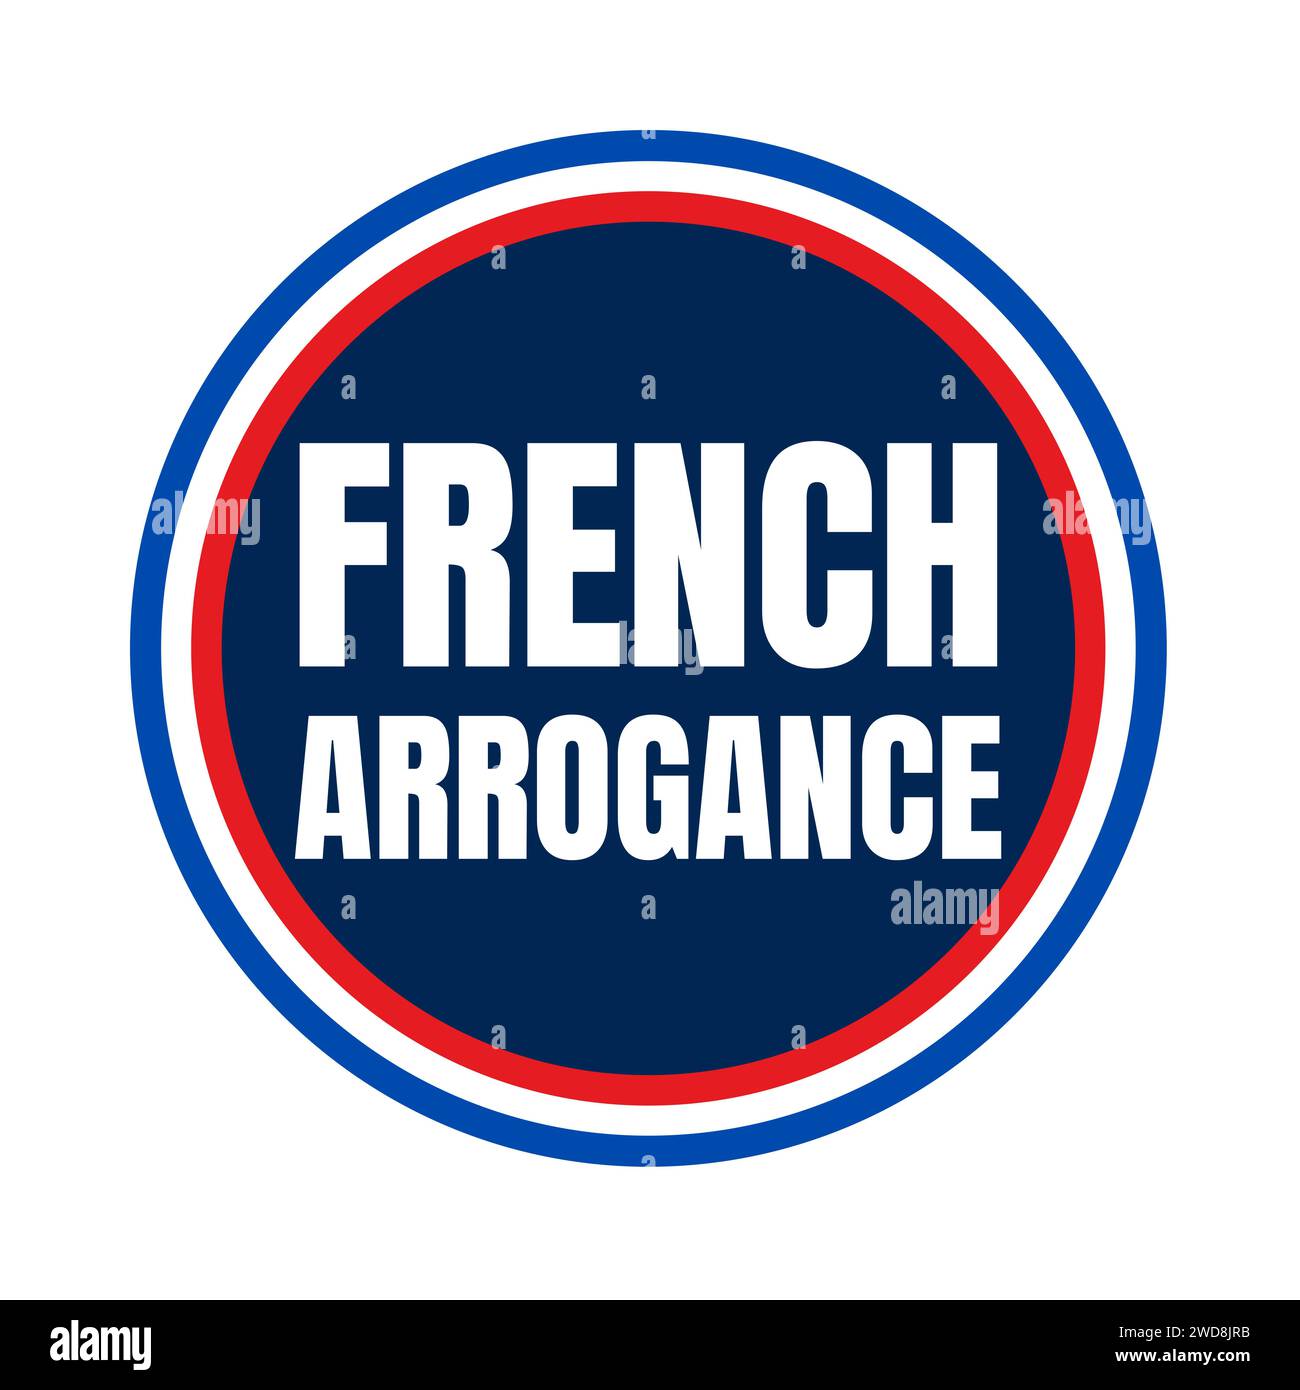 French arrogance symbol icon Stock Photo